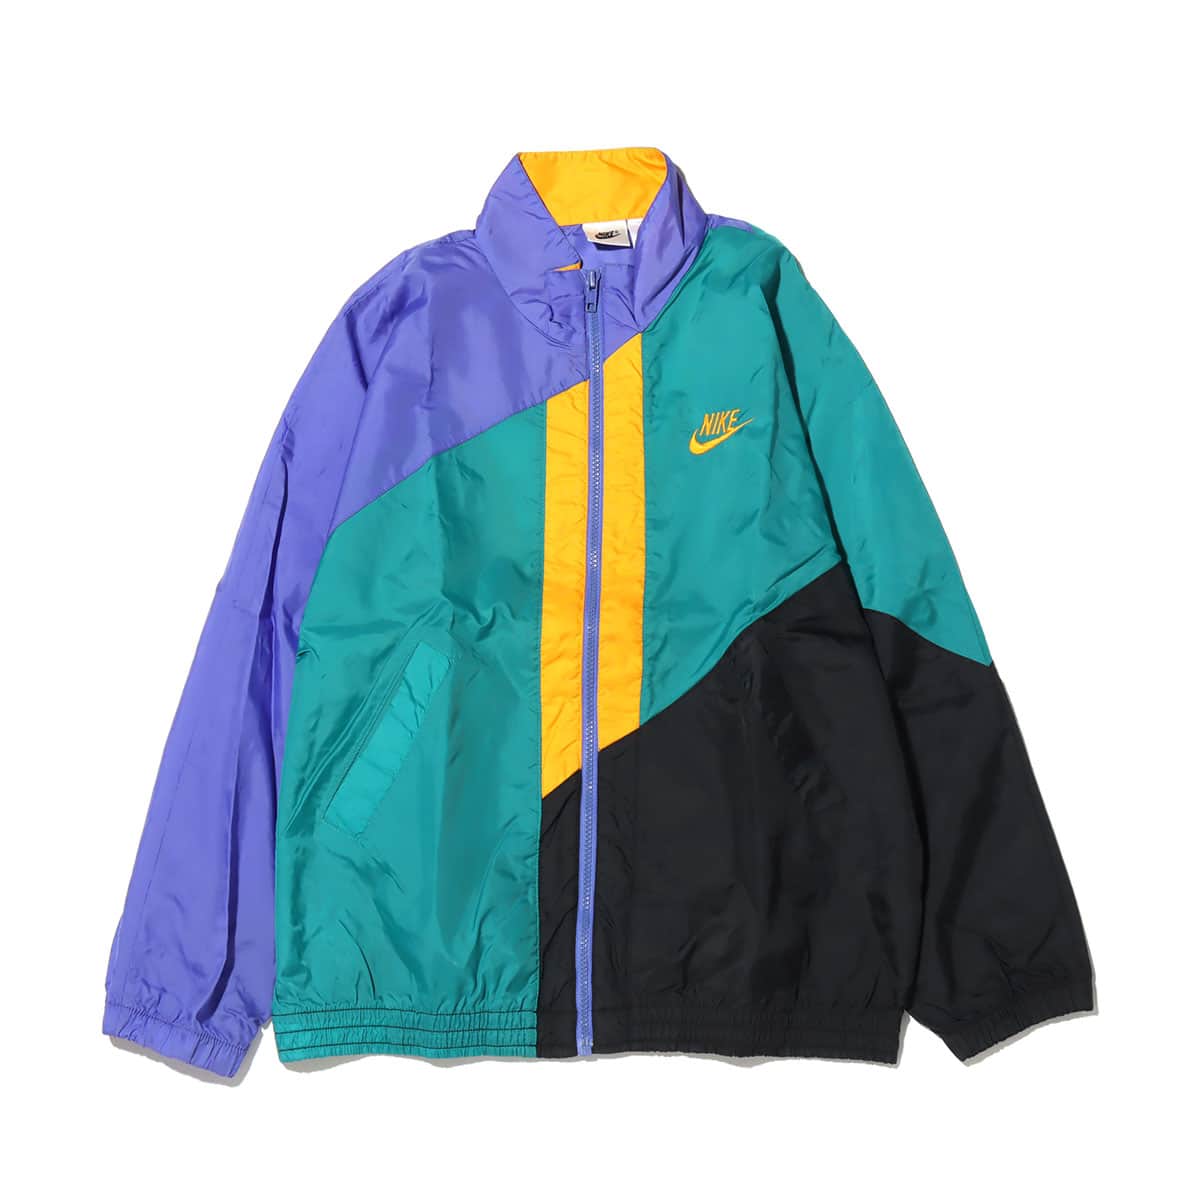 90s vintage NIKE nylon jacket